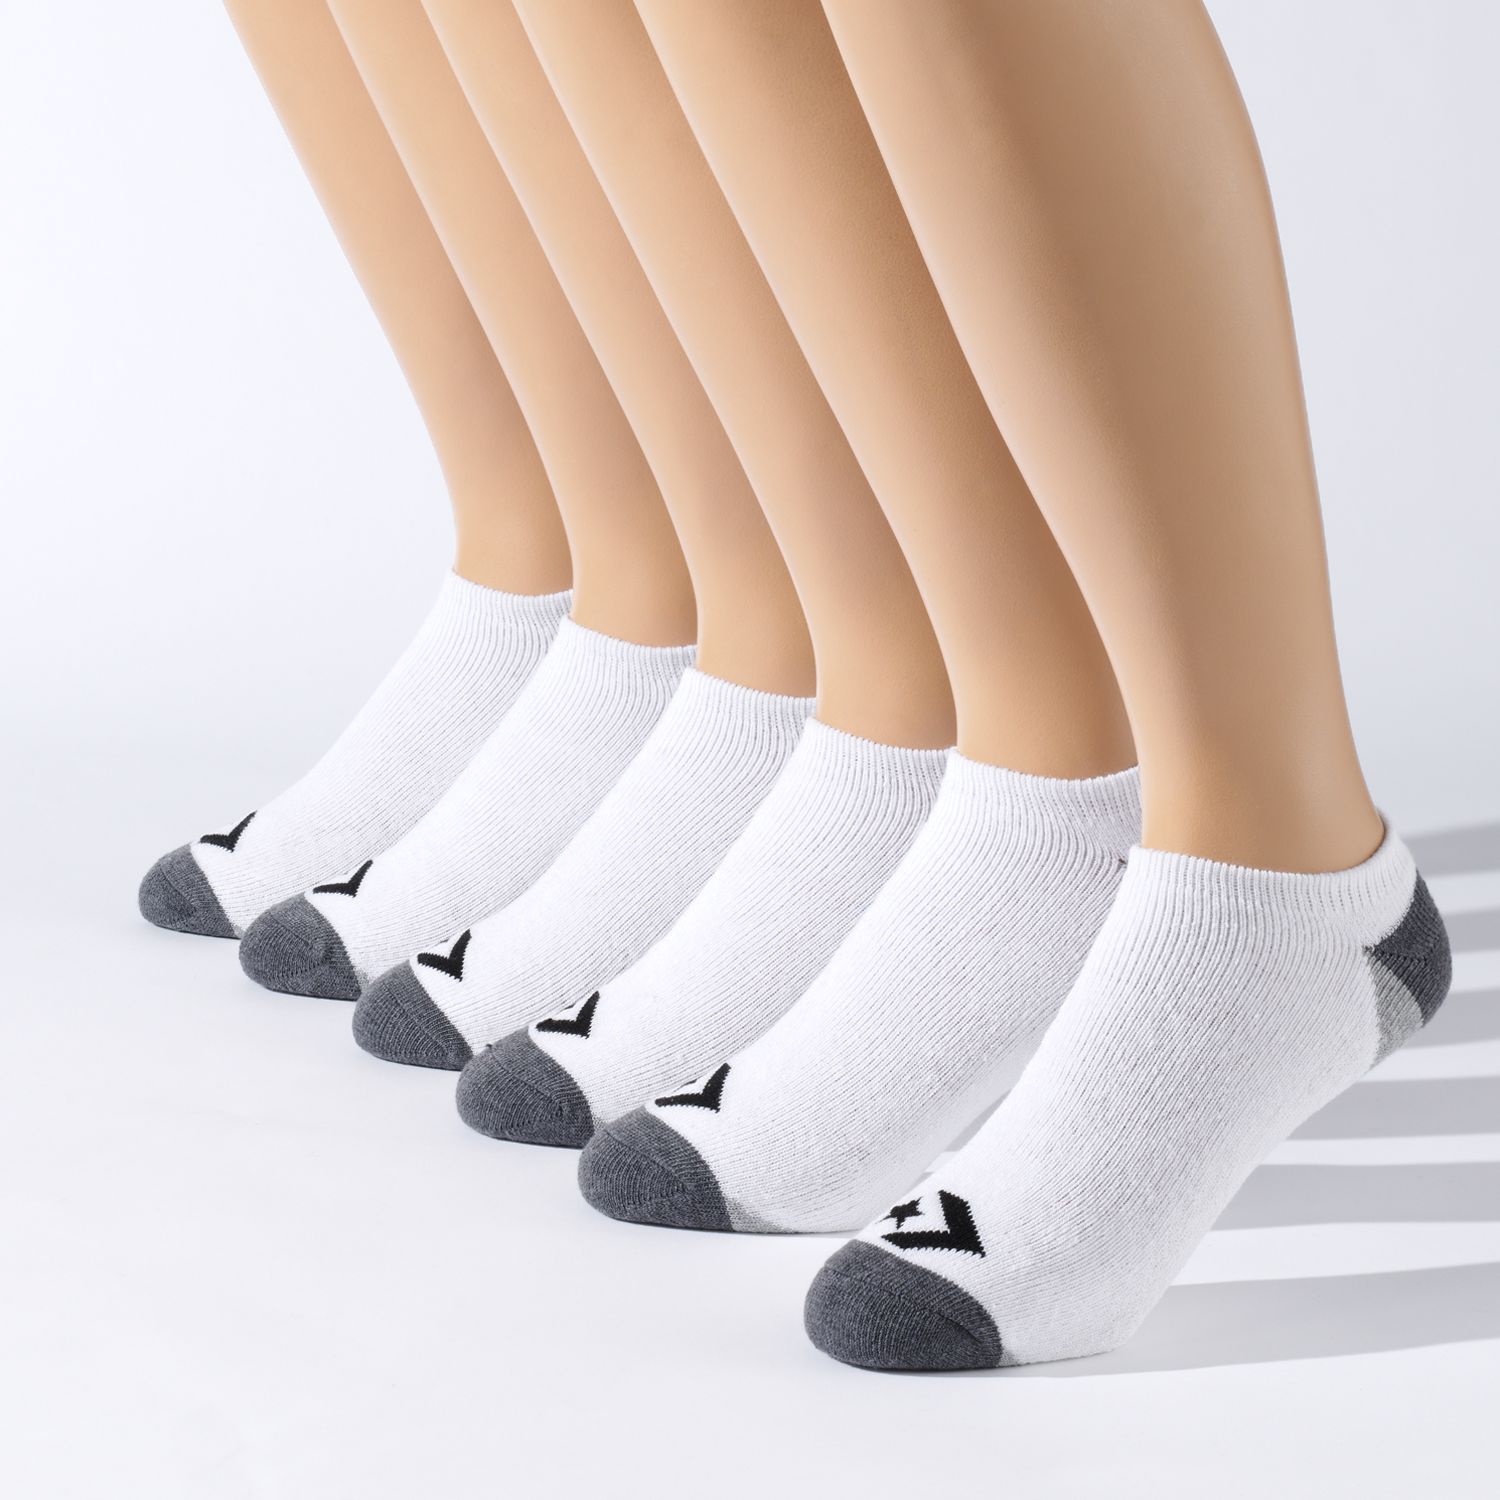 converse sports socks